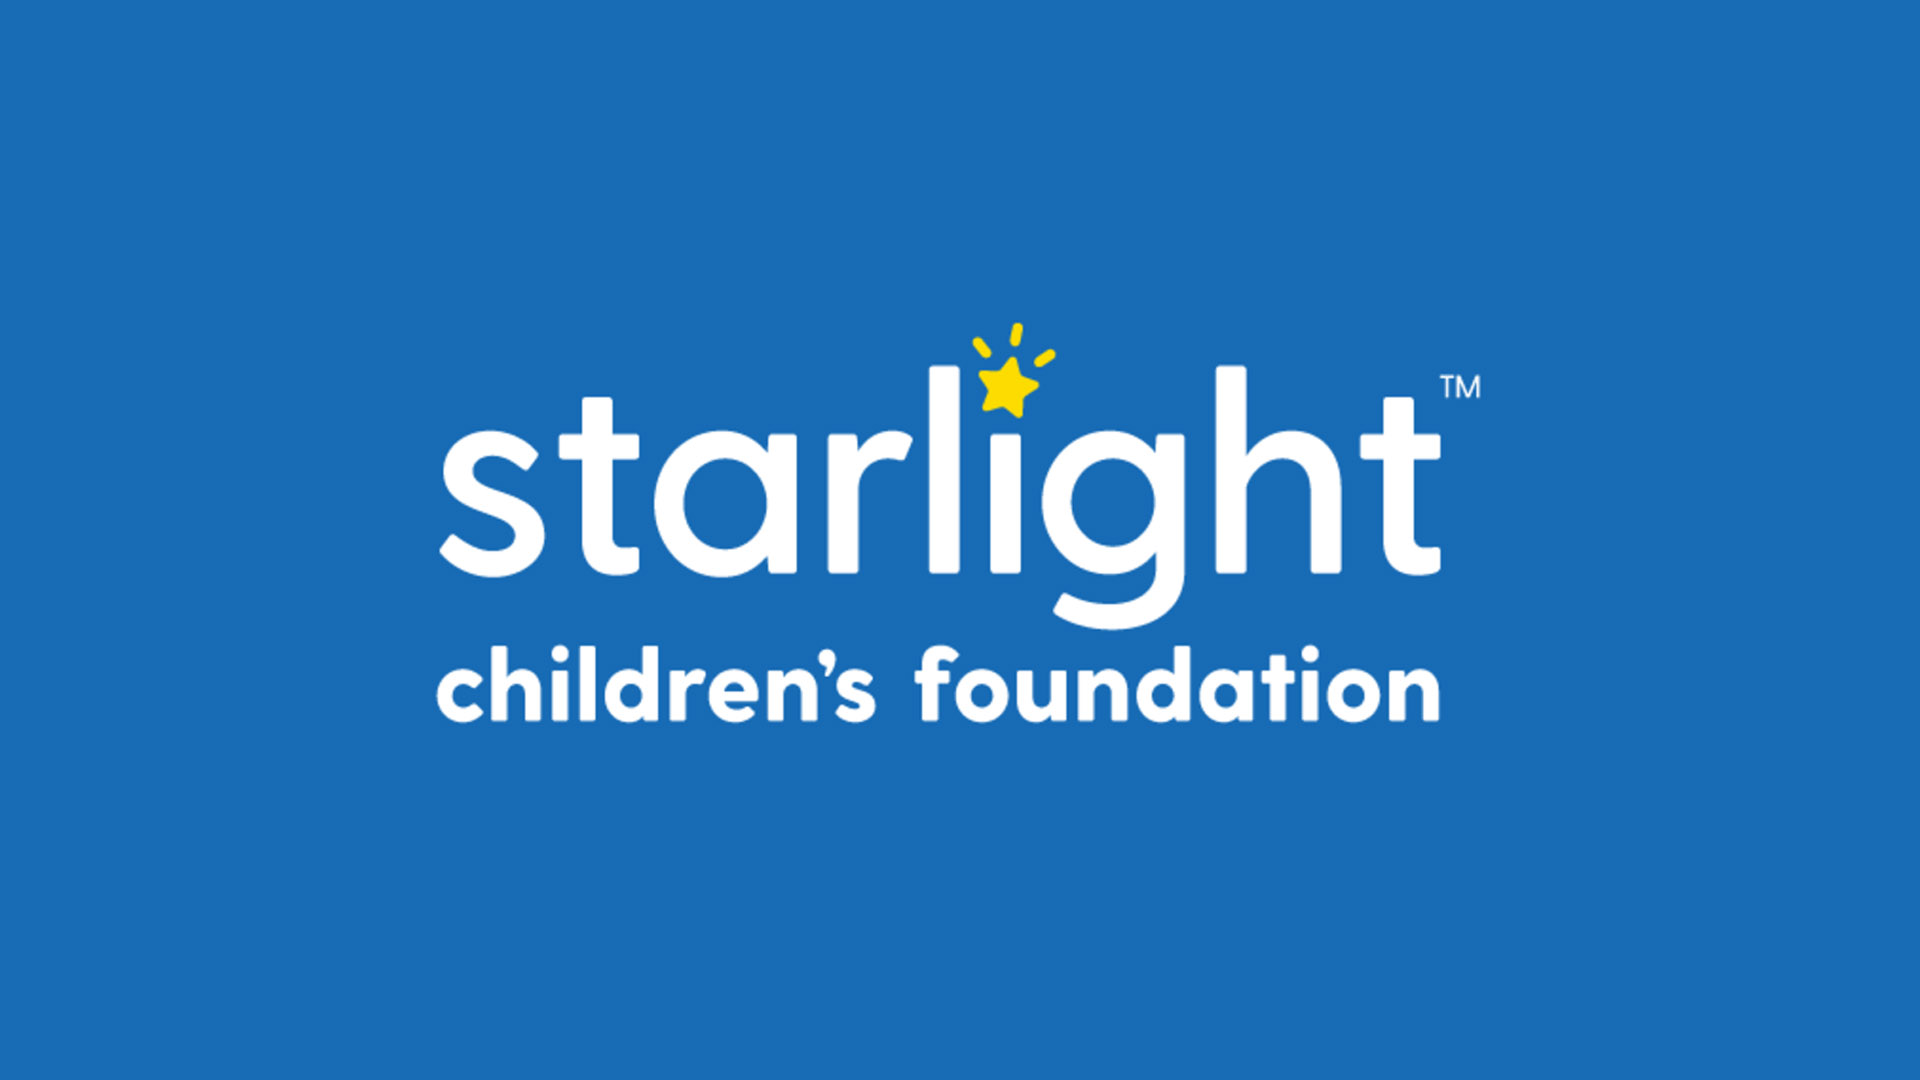 starlight cf logo 16 by 9